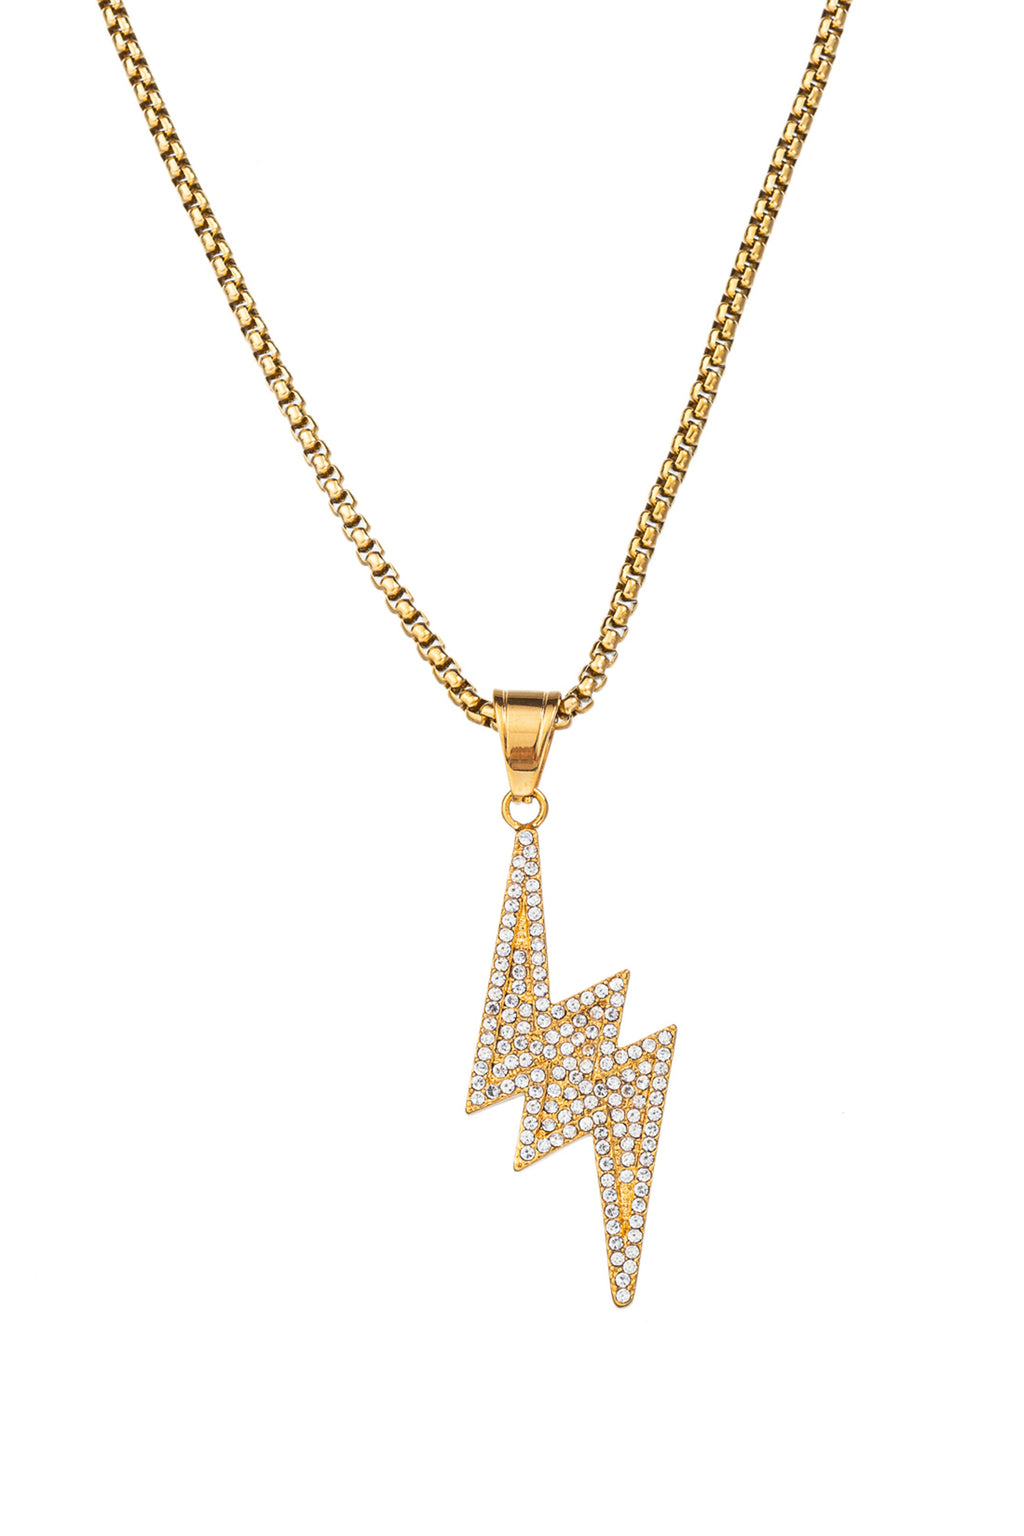 Gold tone titanium lightning bolt pendant necklace studded with CZ crystals.